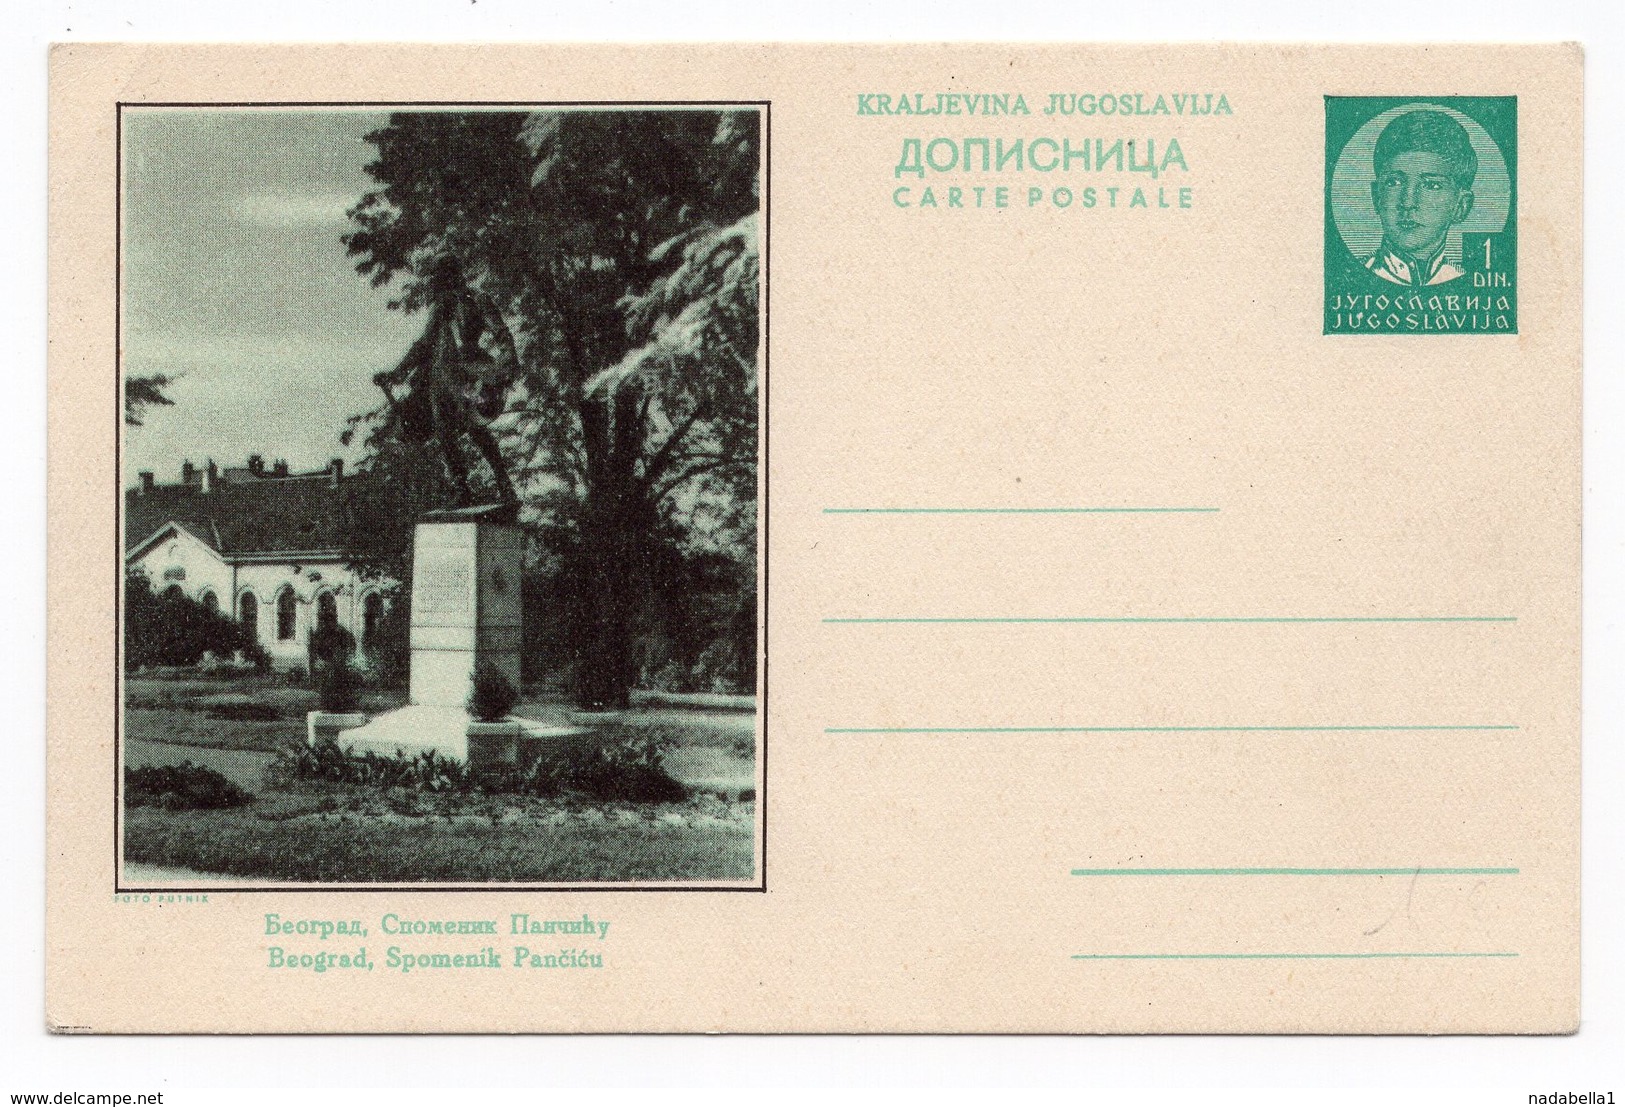 YUGOSLAVIA, SERBIA, BEOGRAD, JOSIF PANCIC MONUMENT, 1938 1 DIN GREEN, NOT USED, STATIONERY CARD - Postal Stationery